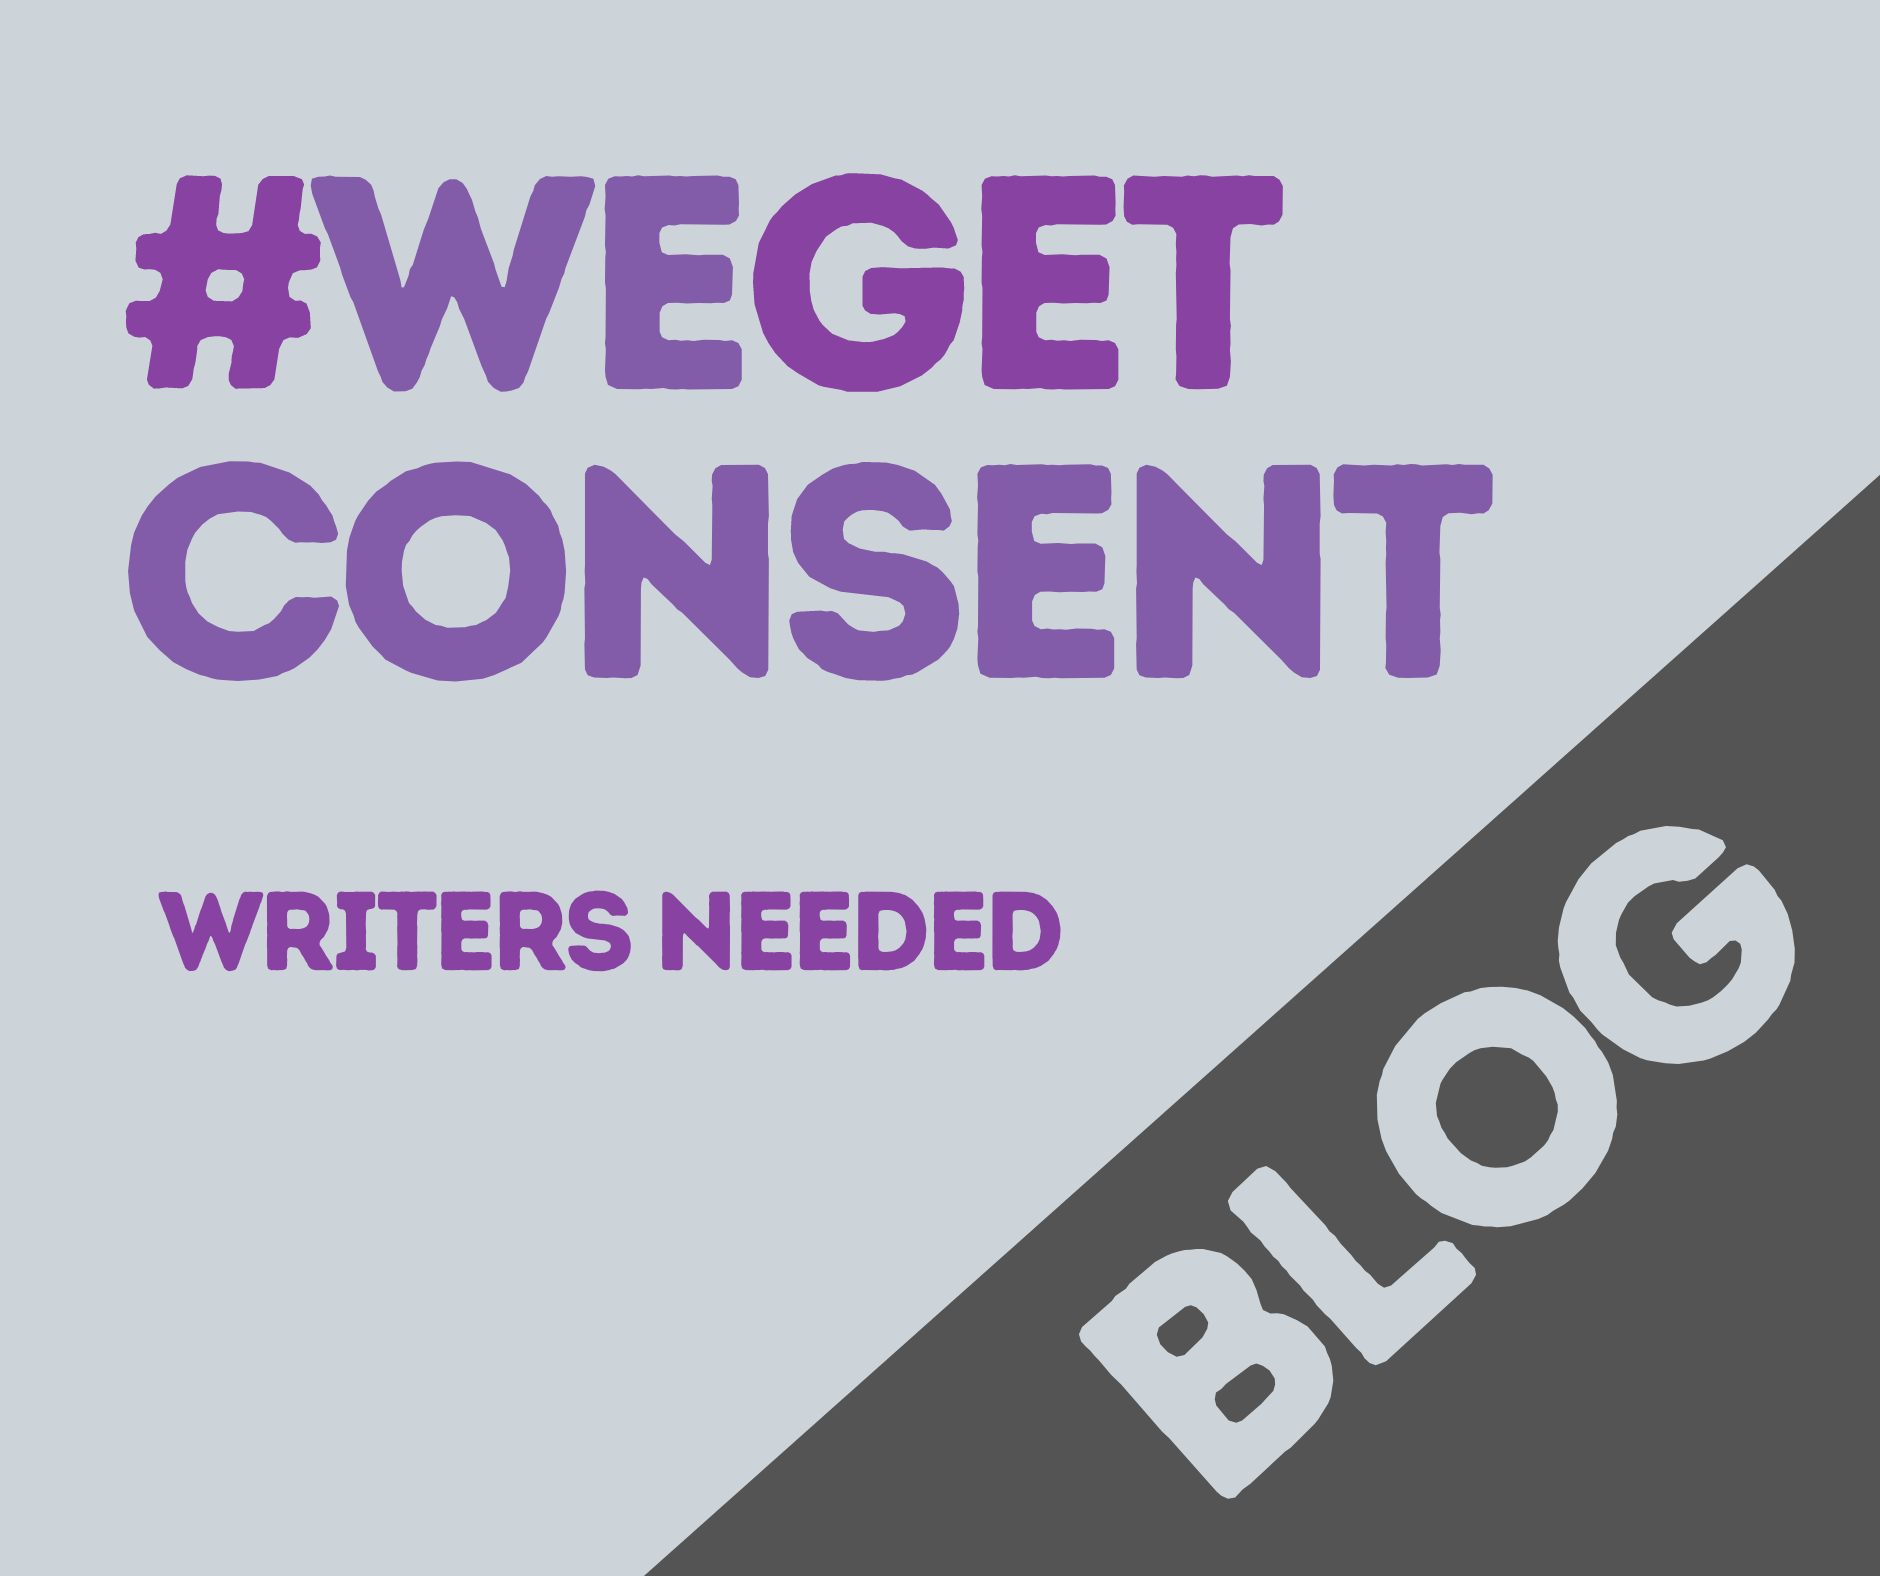 We Get Consent blog image